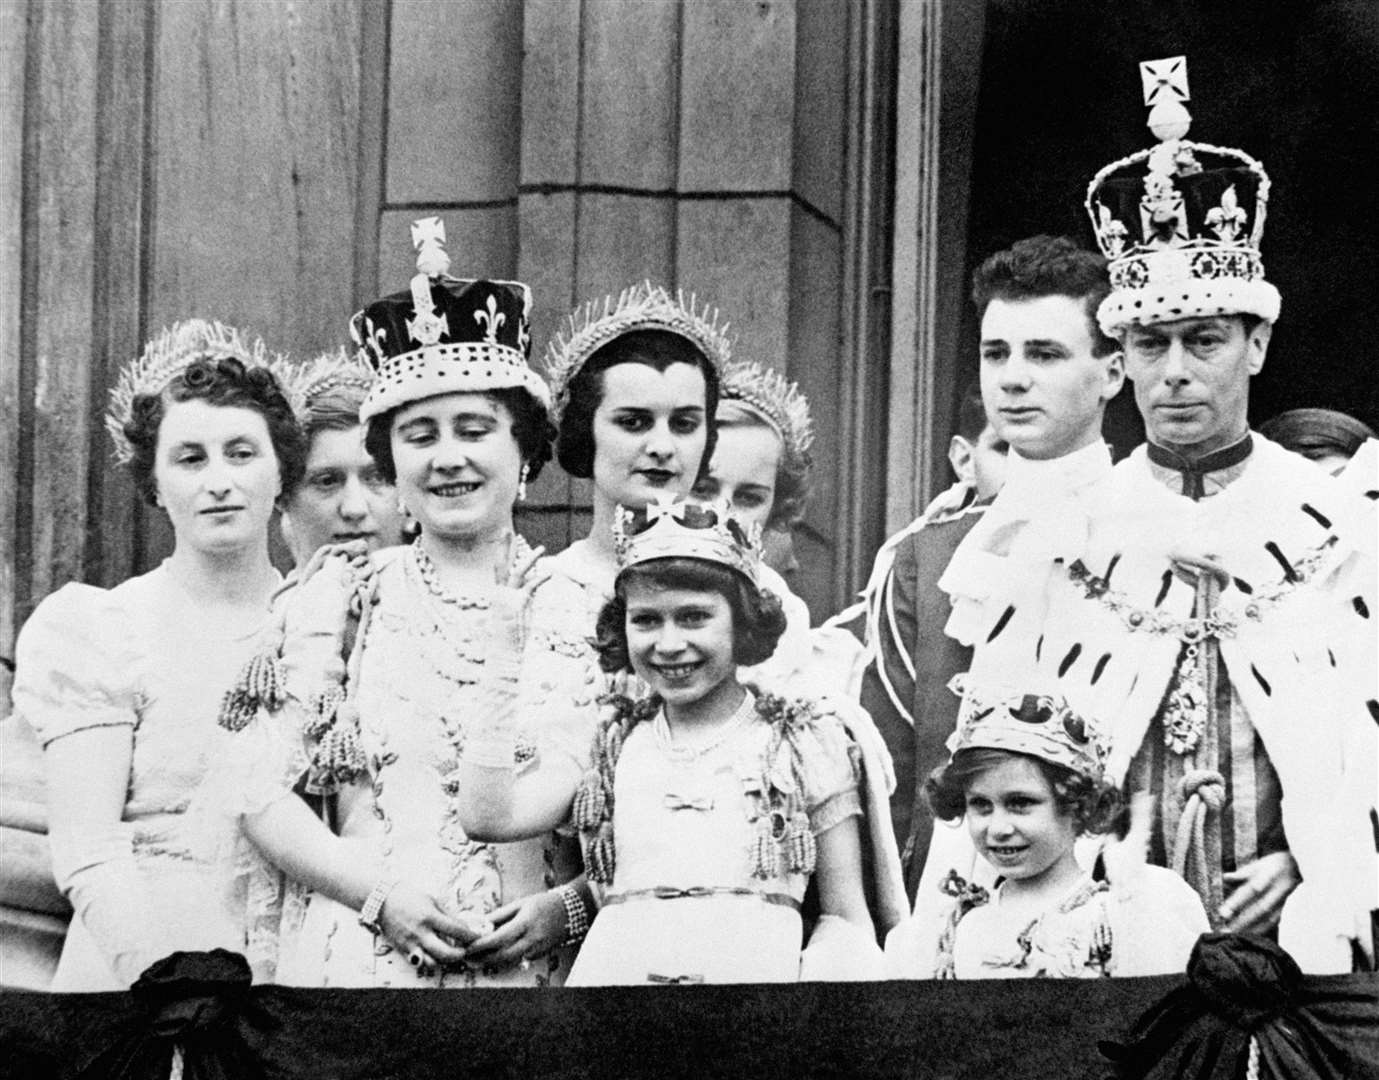 The coronation balcony appearance in 1937 (PA)